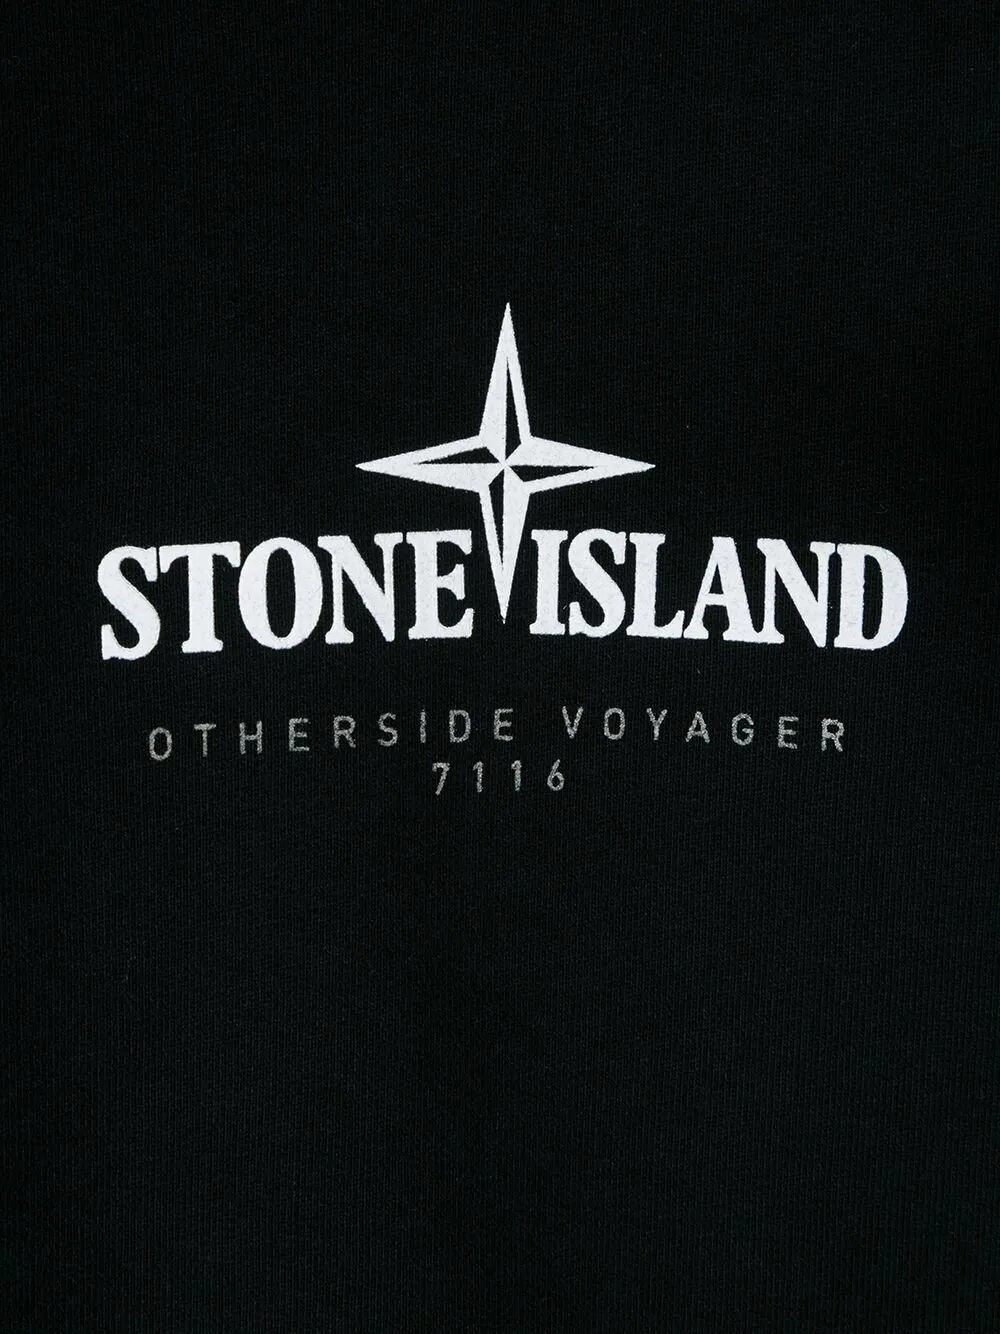 Значок stone. Логотипсанайленд. Стон Исланд. Стон Айленд лого. Stone Island logo.